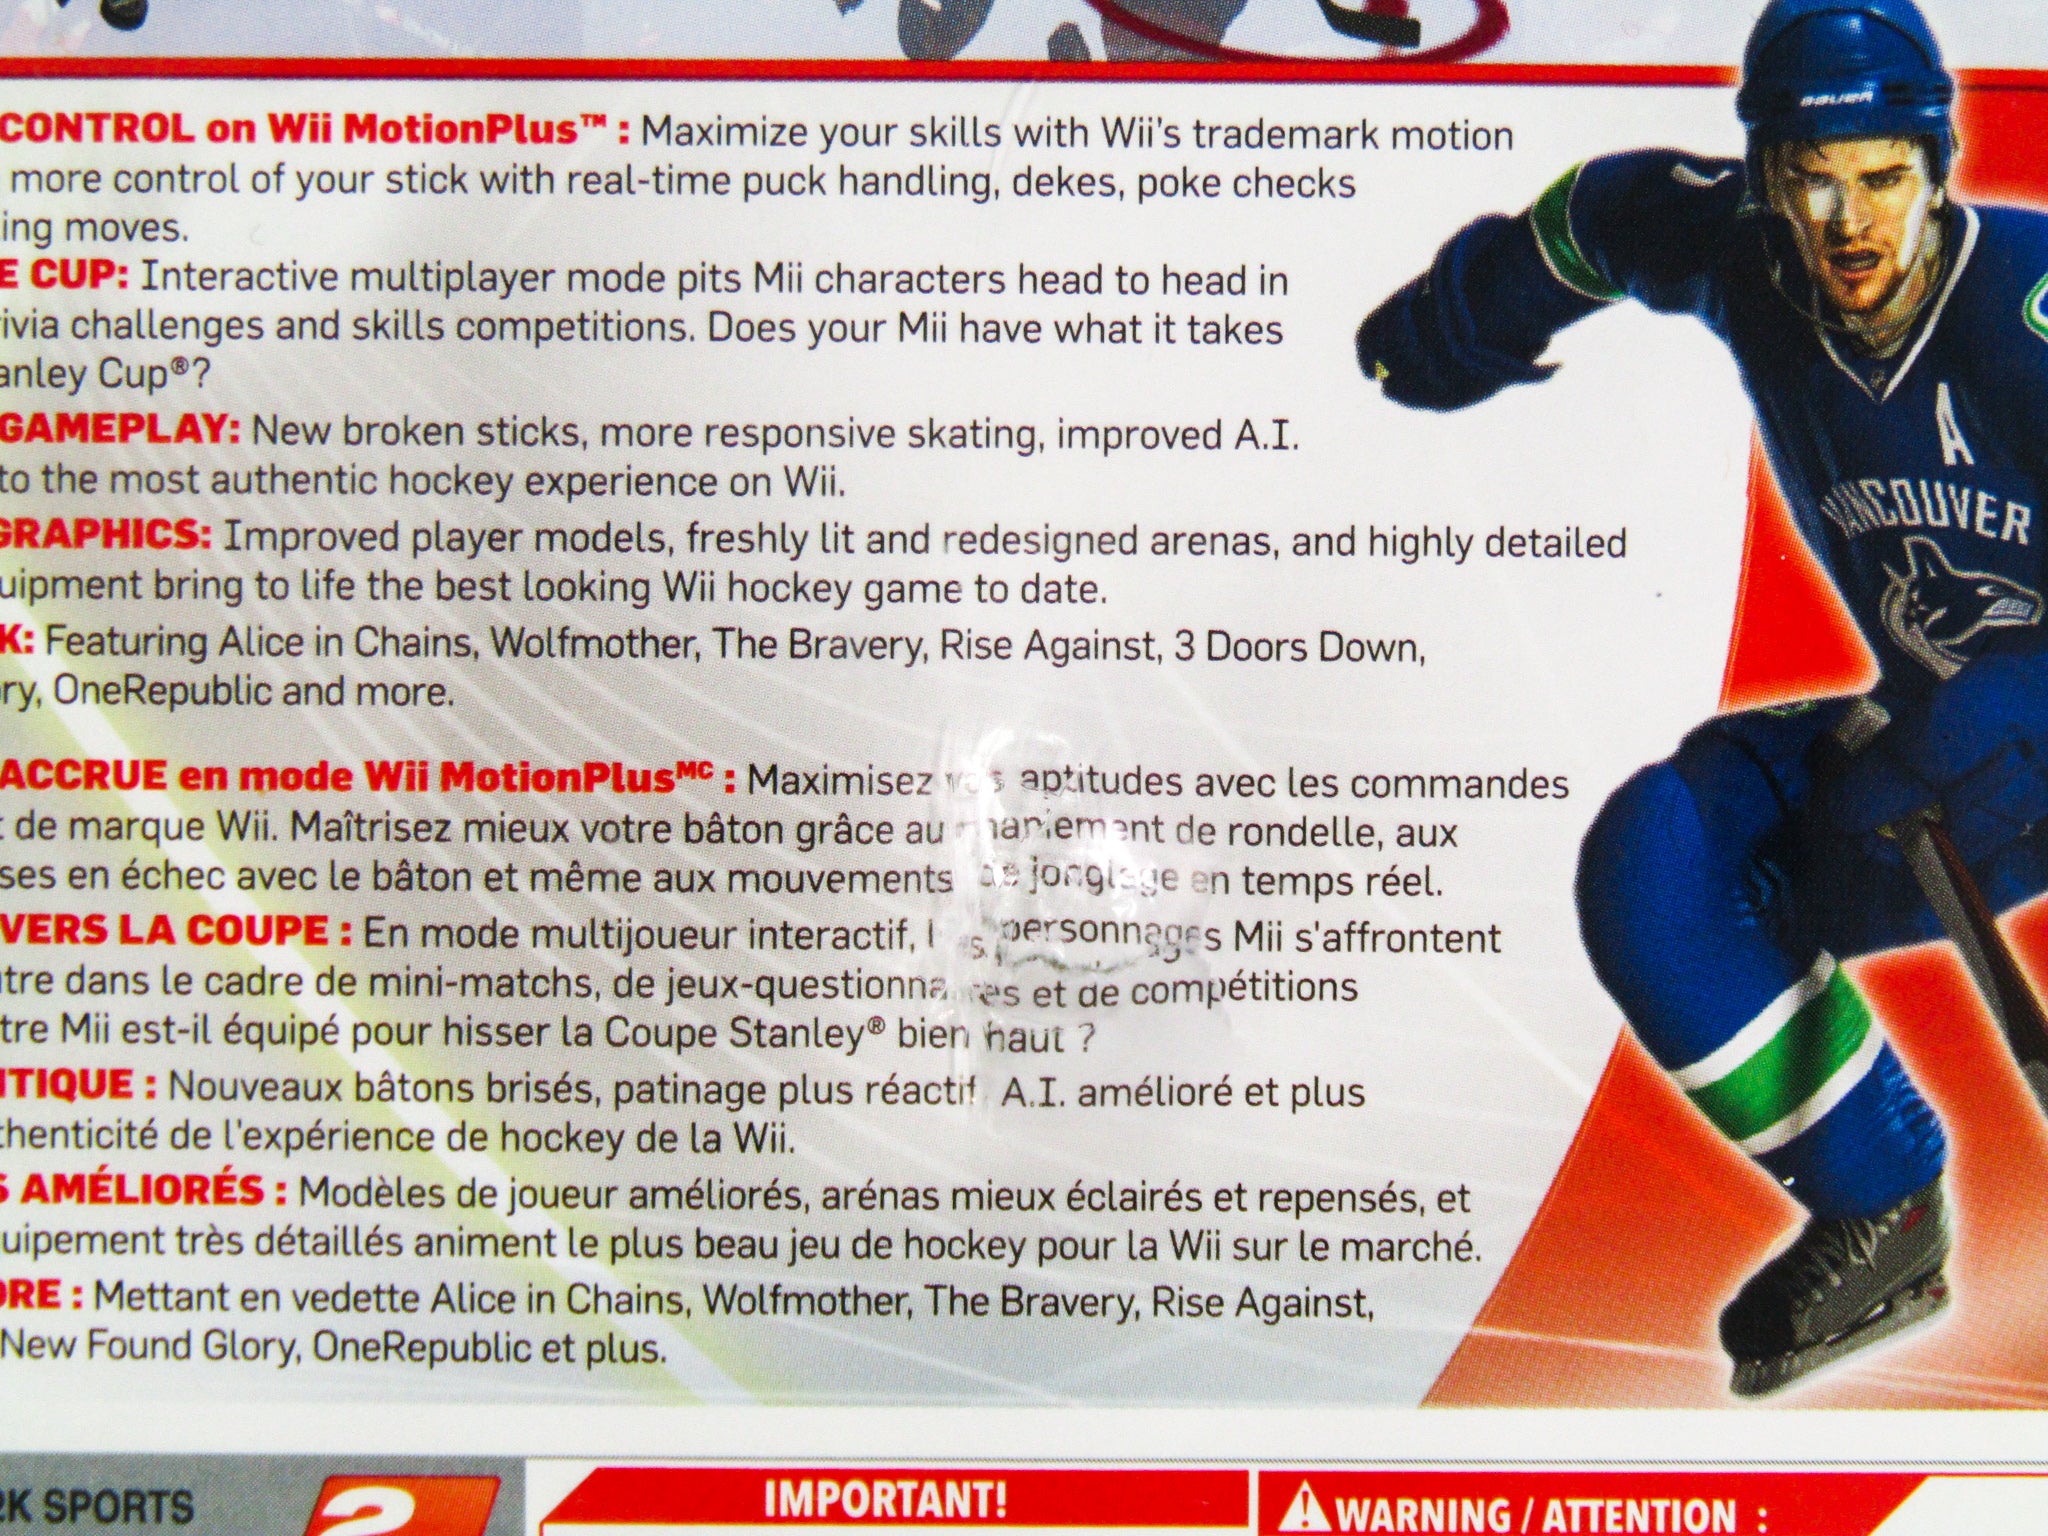  NHL 2K11 - Nintendo Wii : Video Games